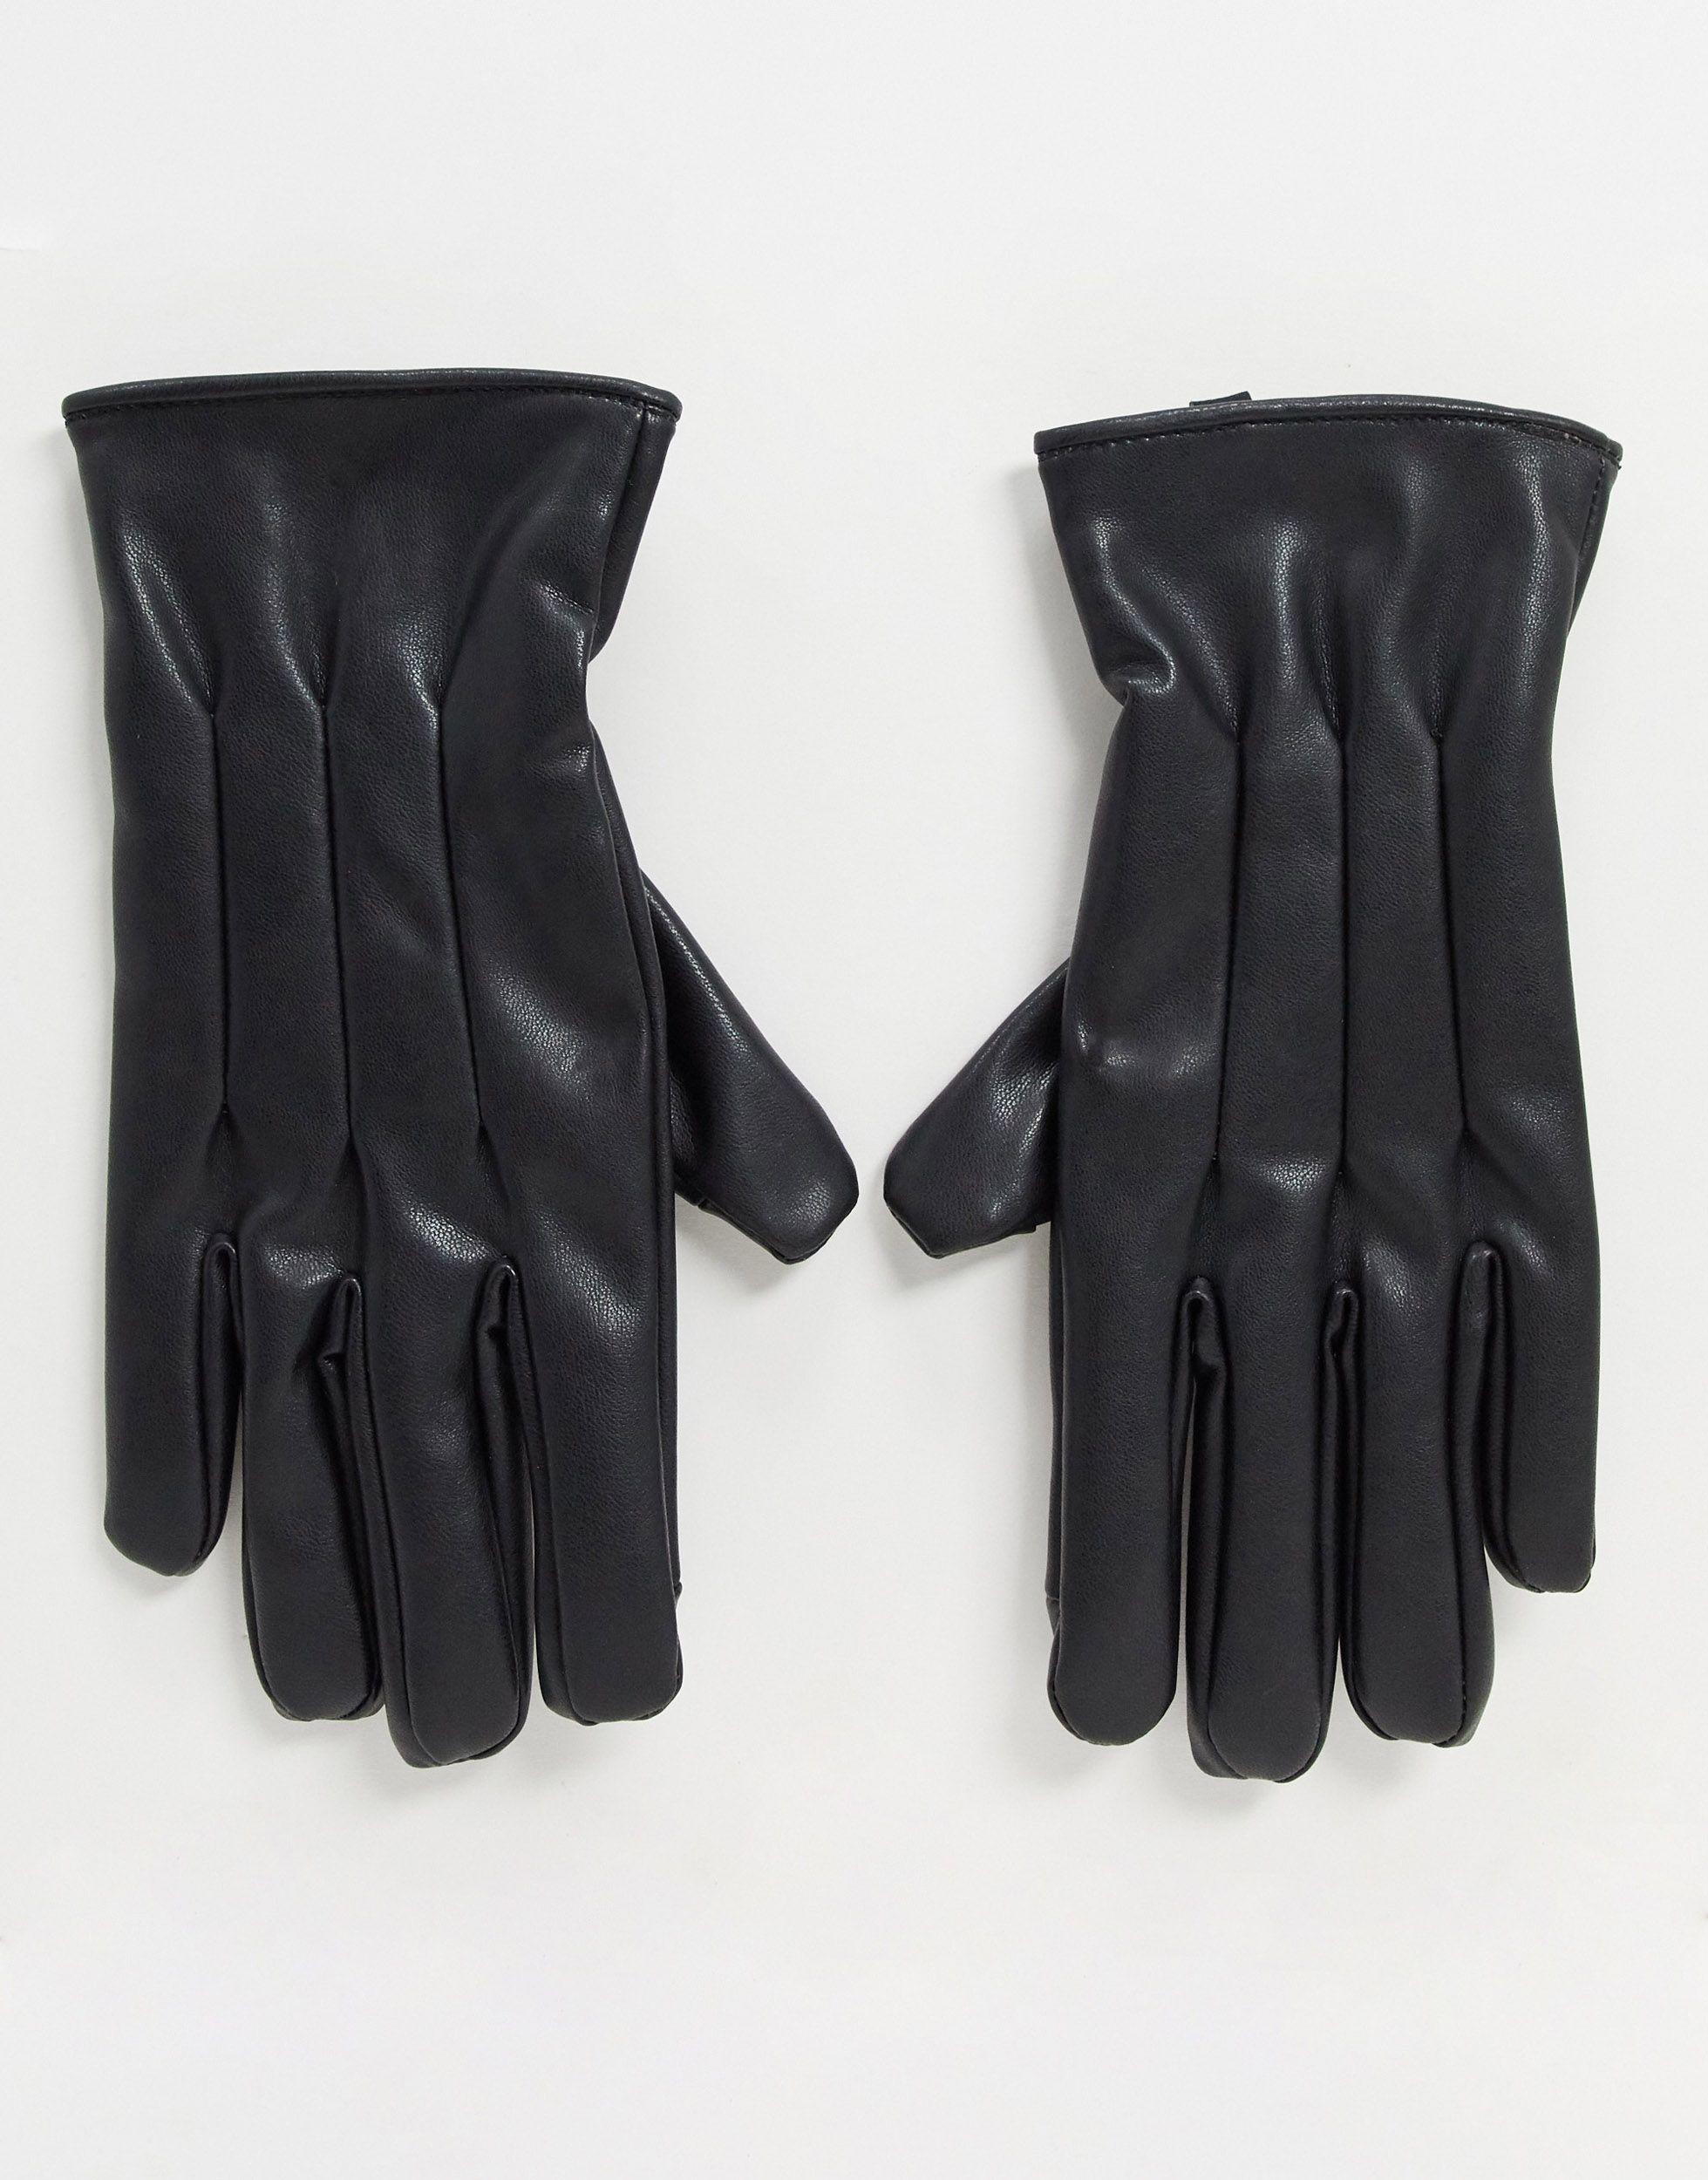 Jack & Jones Faux Leather Gloves in Black for Men - Lyst